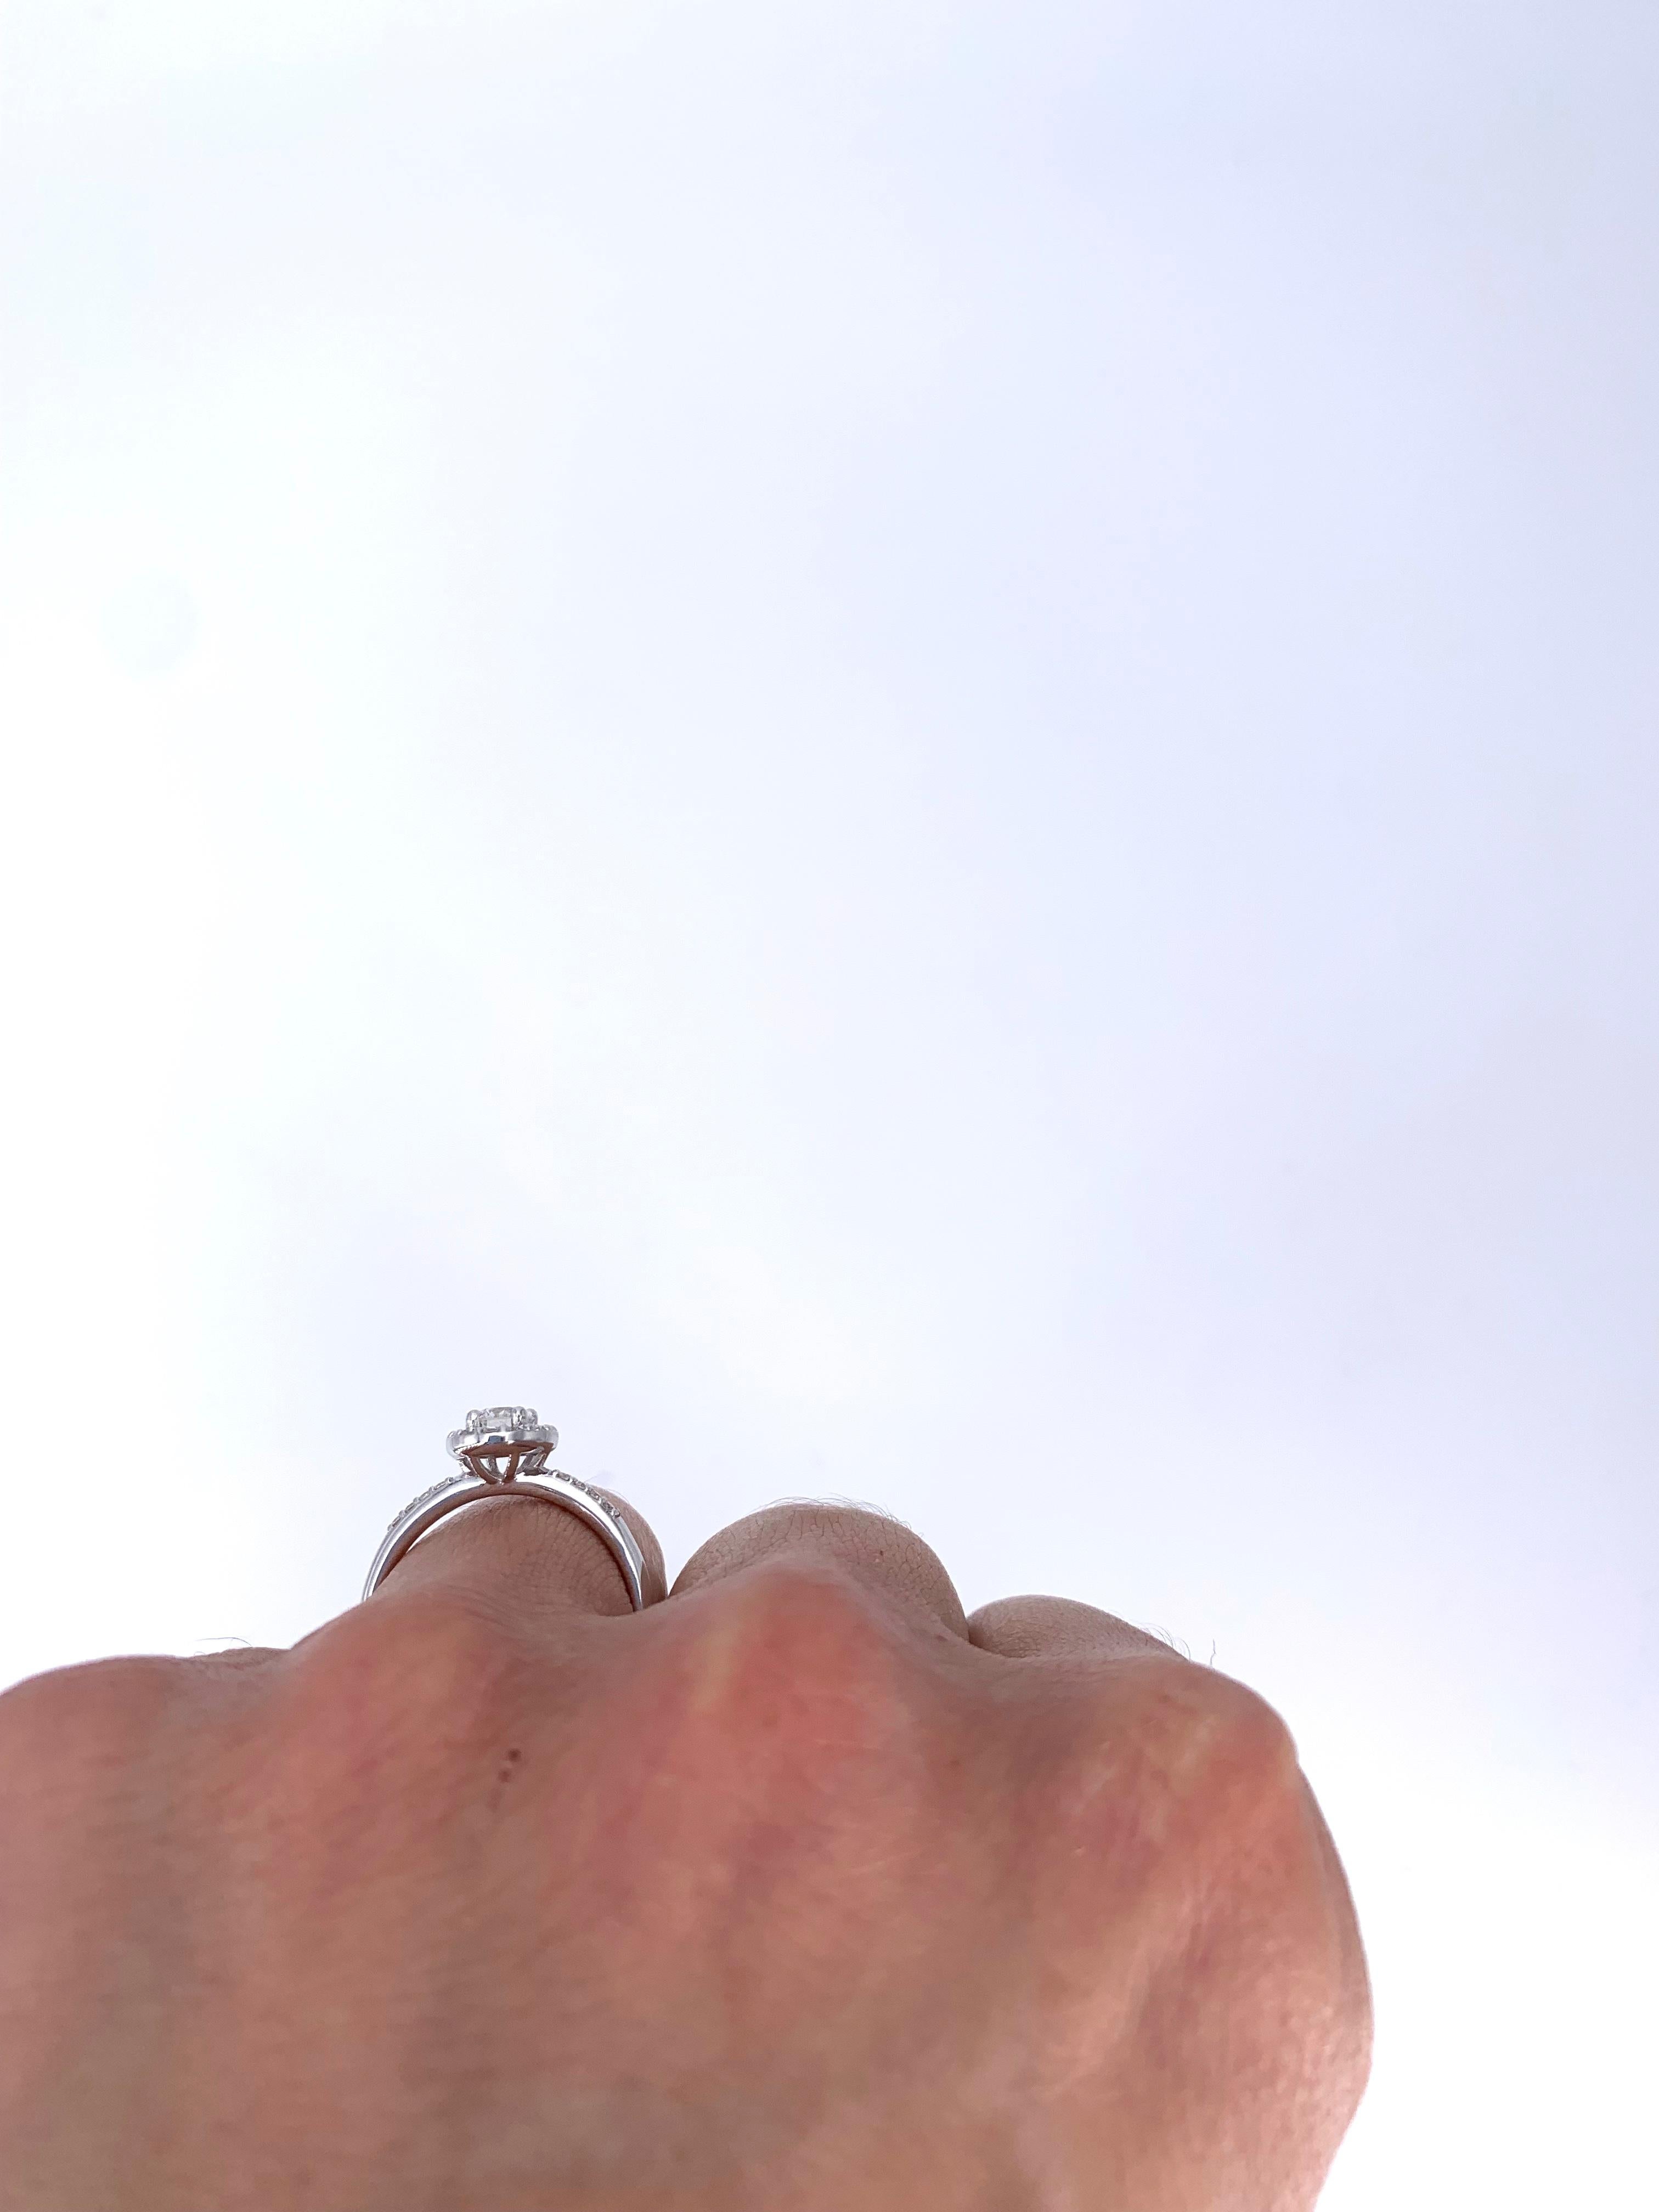 how big is a 0.3 carat diamond